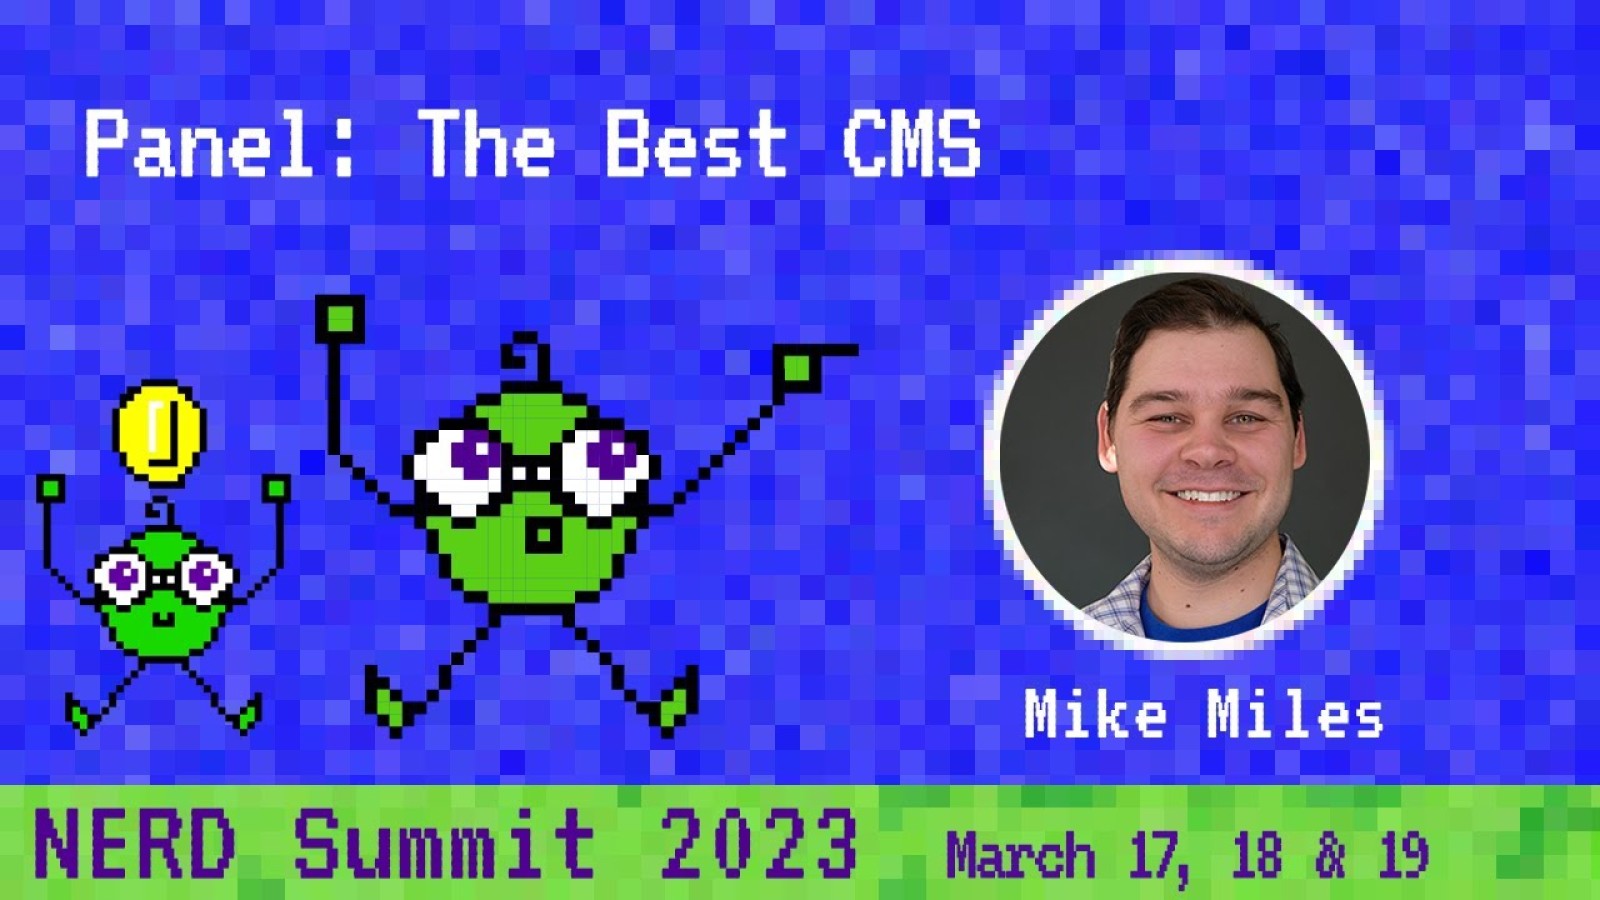 The Best CMS (Panel Moderator)